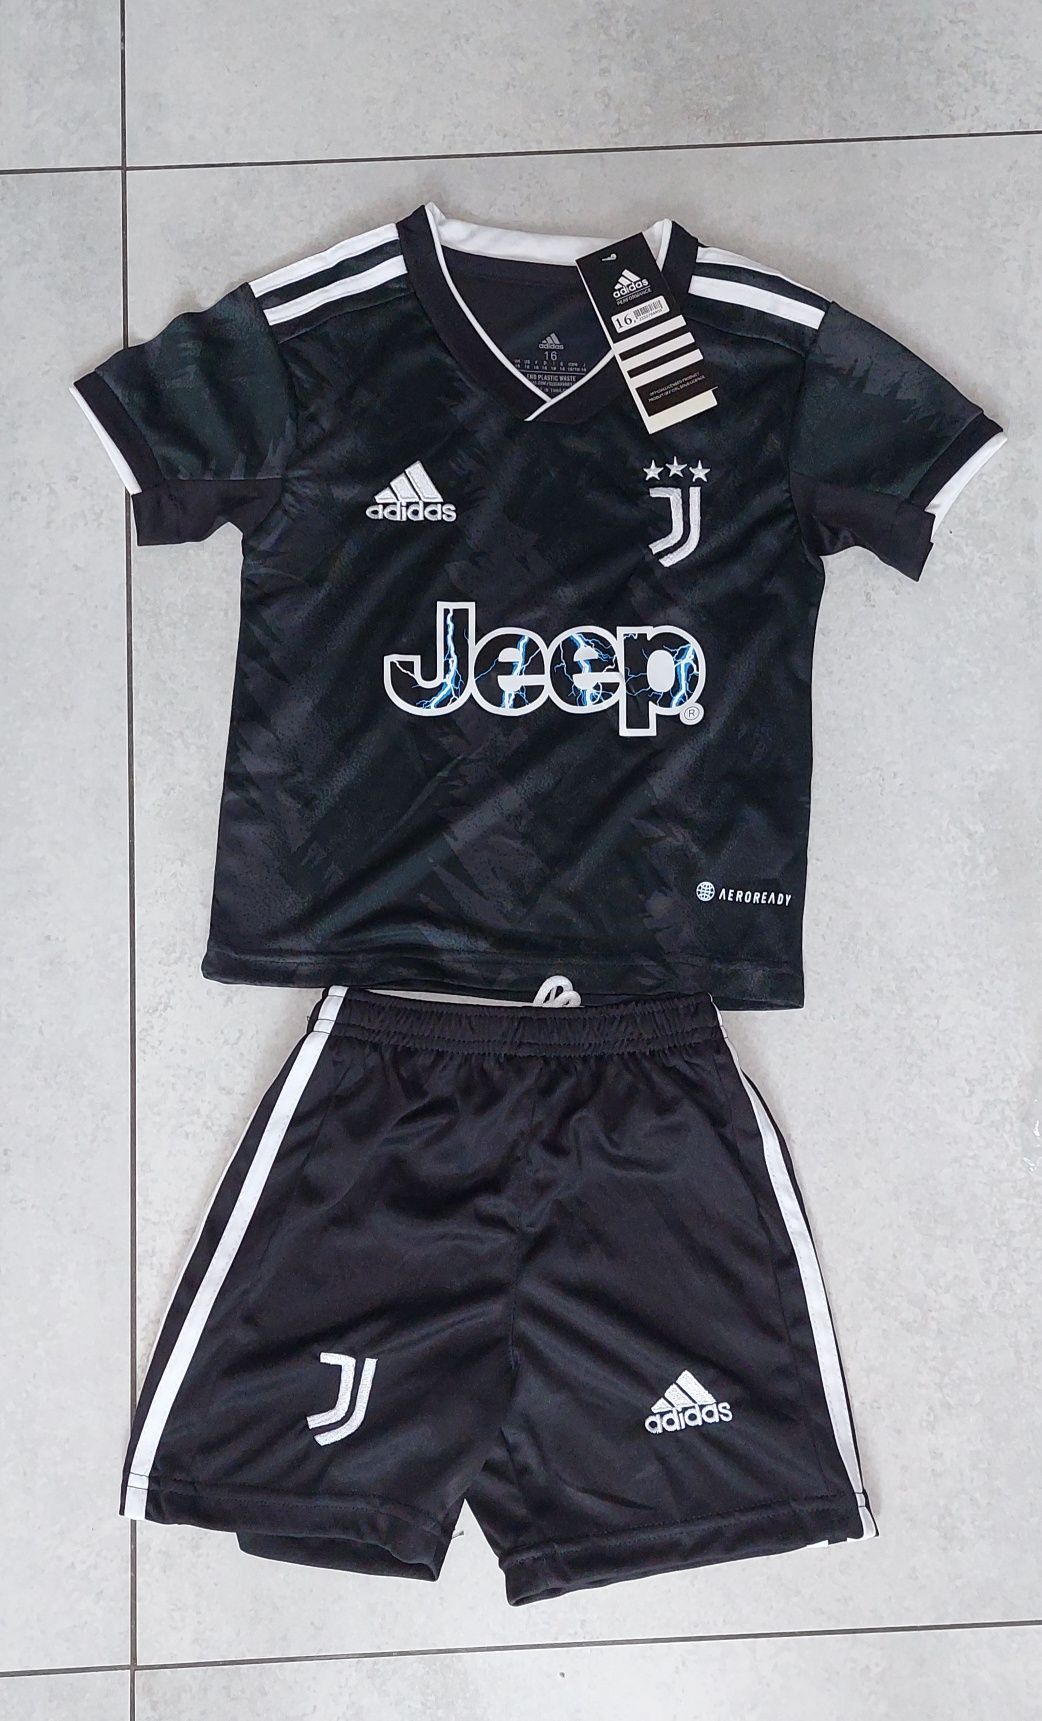 Nowy komplet piłkarski Adidas Juventus Turyn koszulka + spodenki 2-4 l